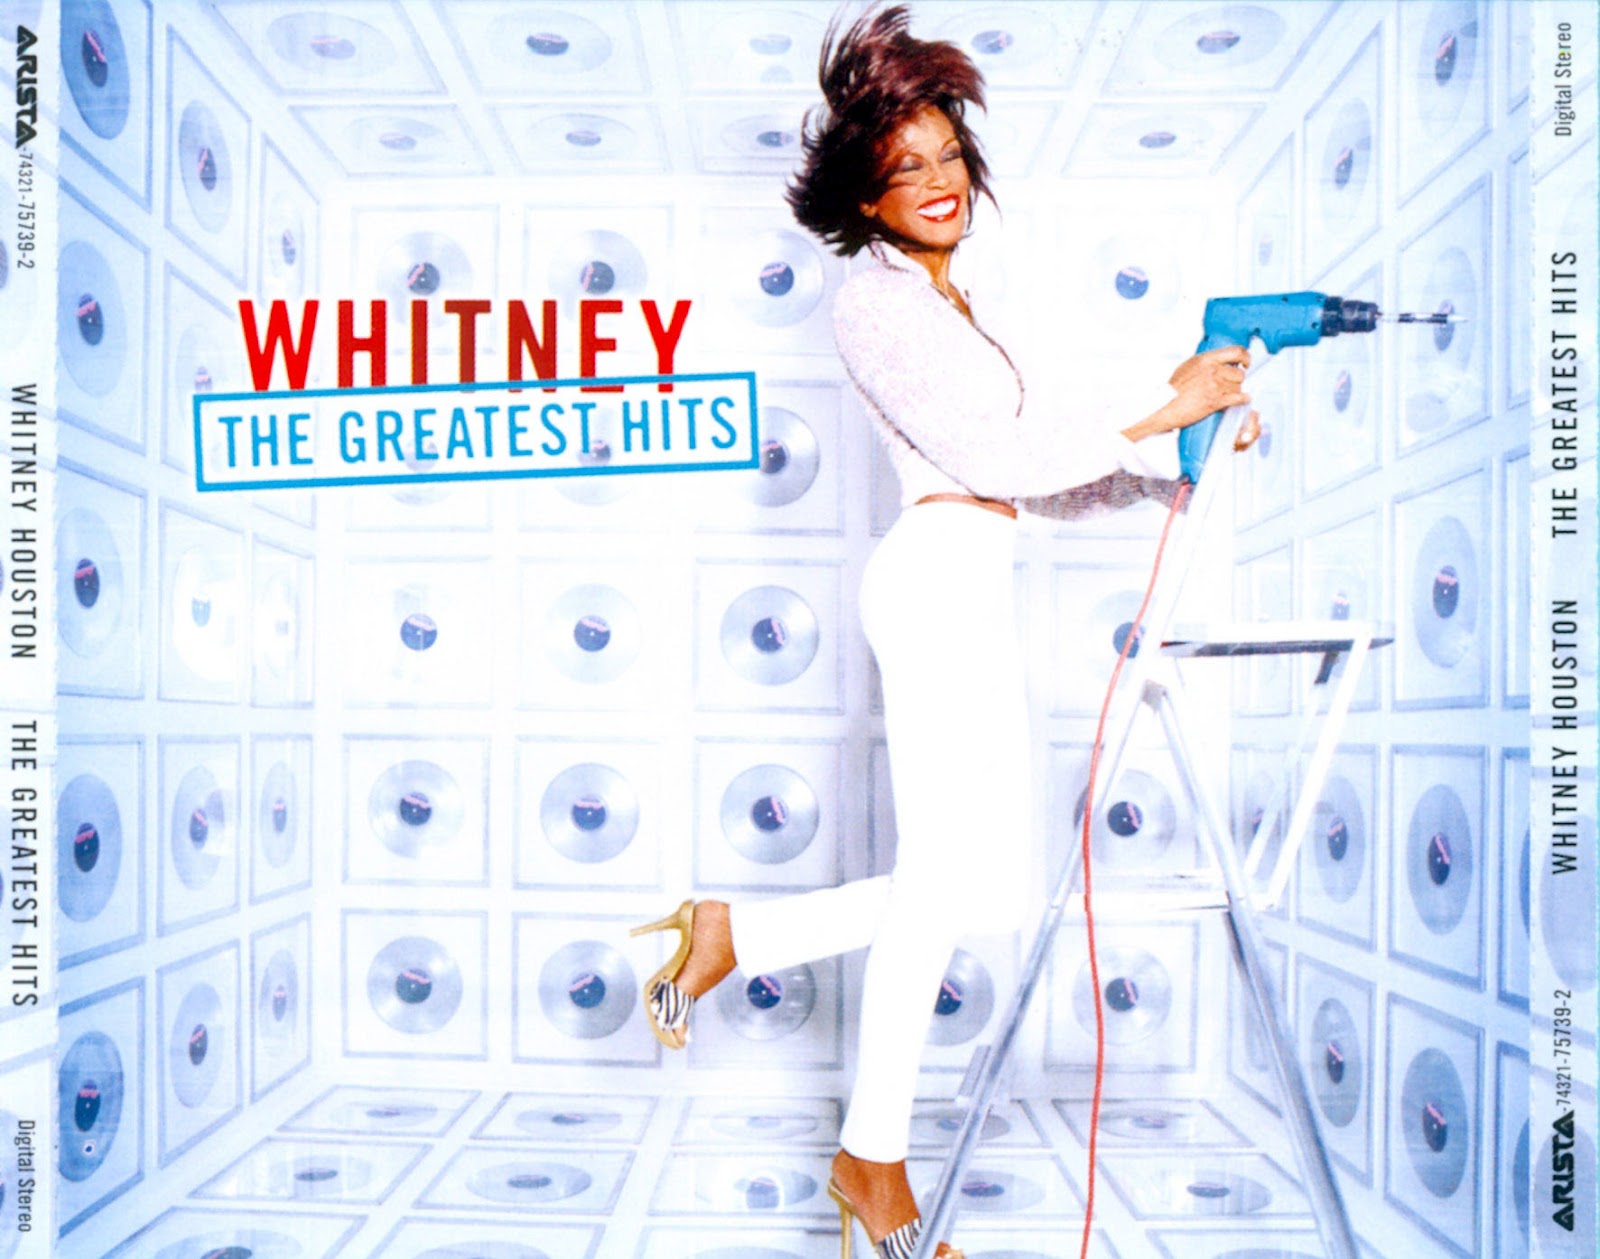 http://3.bp.blogspot.com/-IhjFleYsFEs/Tzcg4HWZAeI/AAAAAAAABPY/fBkZOakRVuc/s1600/Whitney_Houston-The_Greatest_Hits-Frontal.jpg